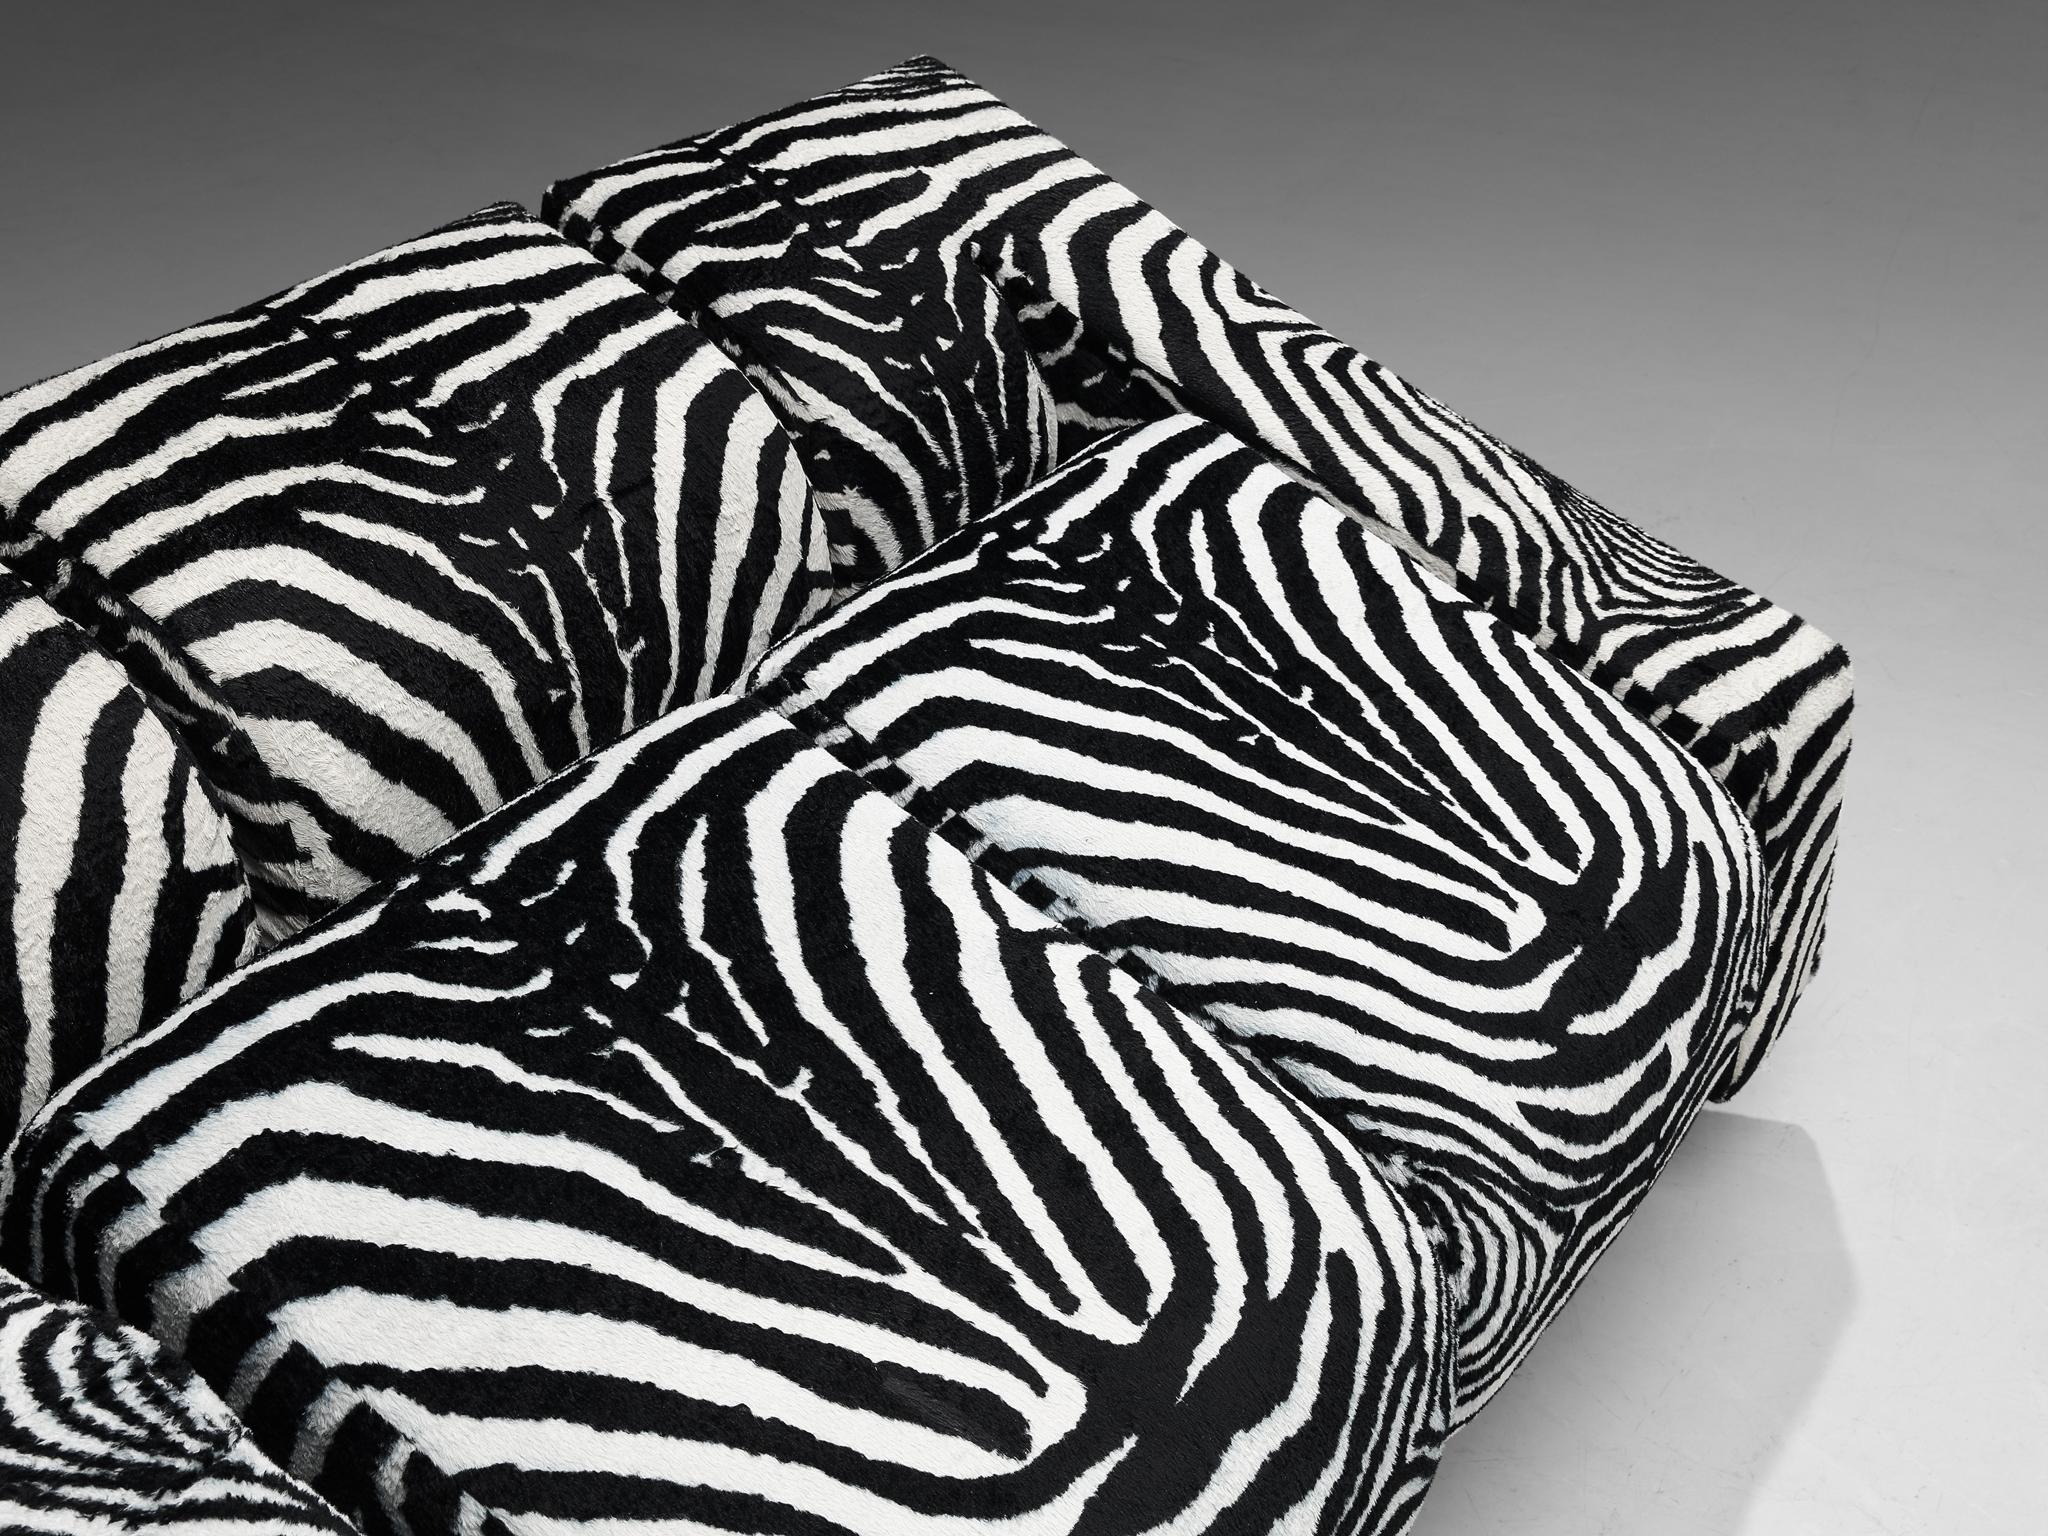 Late 20th Century Mario Botta for Alias 'Obliqua' Sofa in Zebra Print Upholstery 